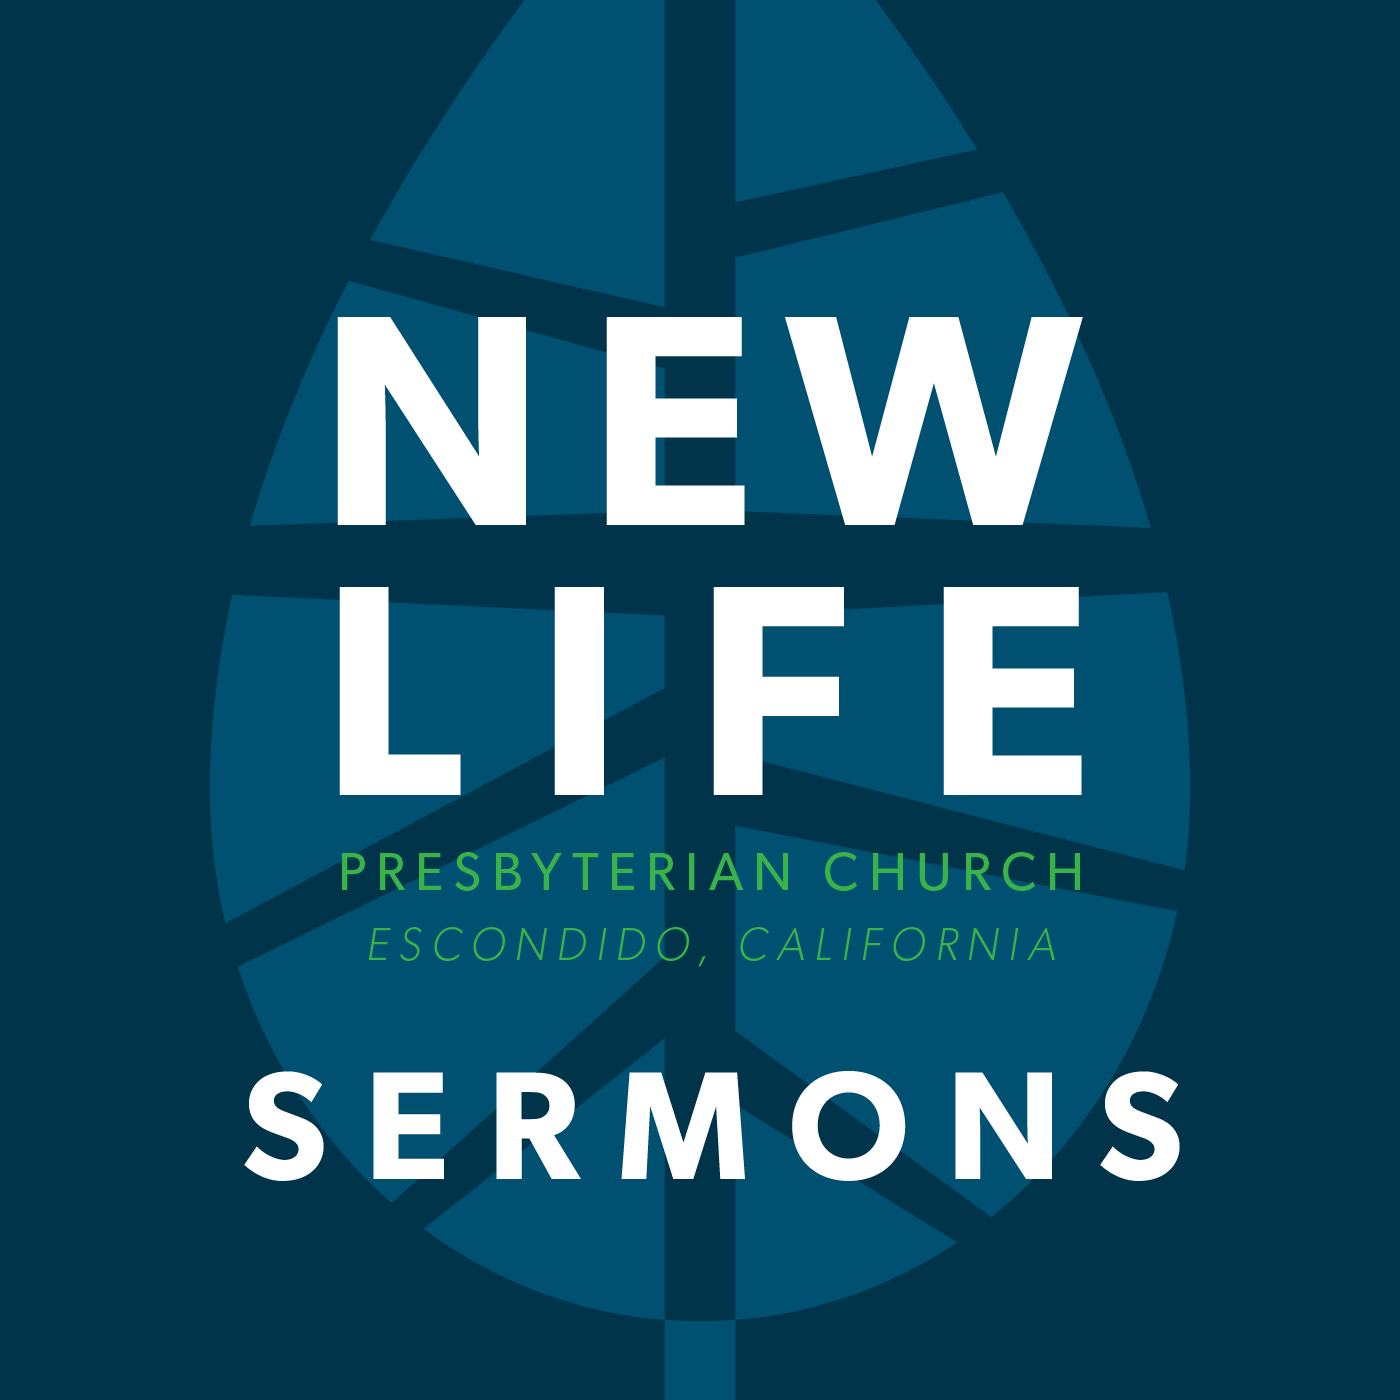 New Life Presbyterian Church Sermons